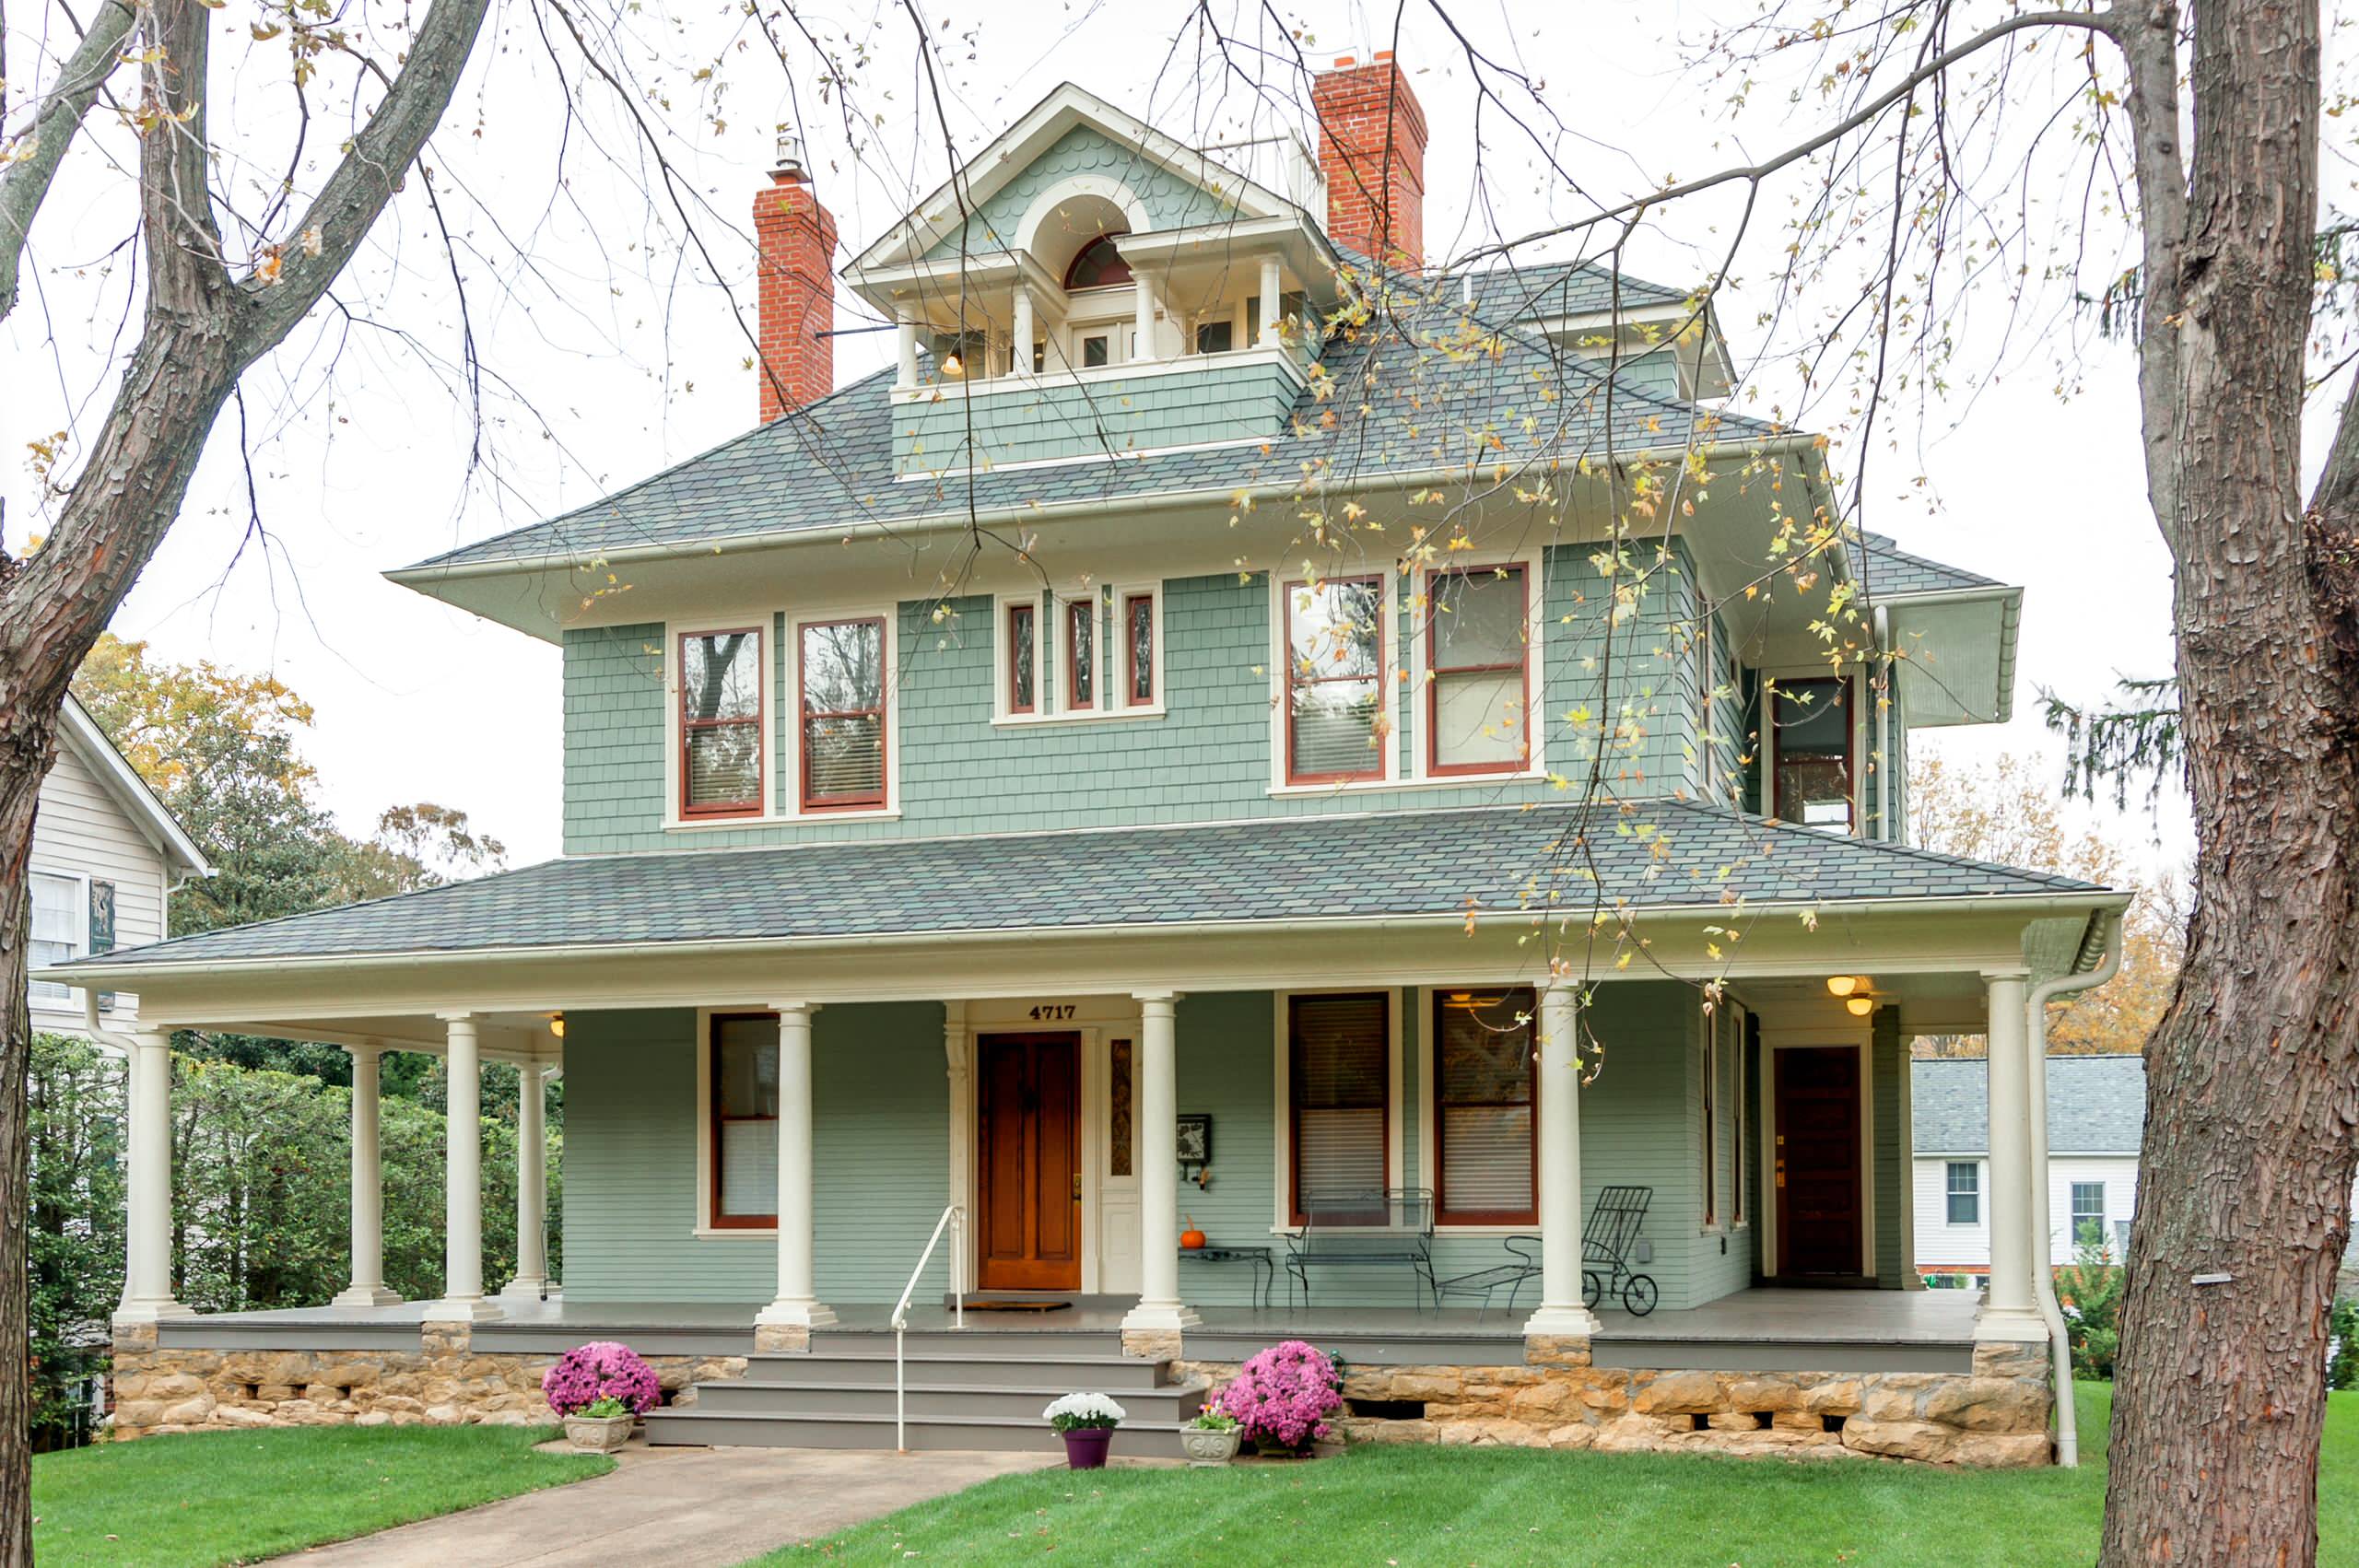 75 Victorian Green Exterior Home Ideas